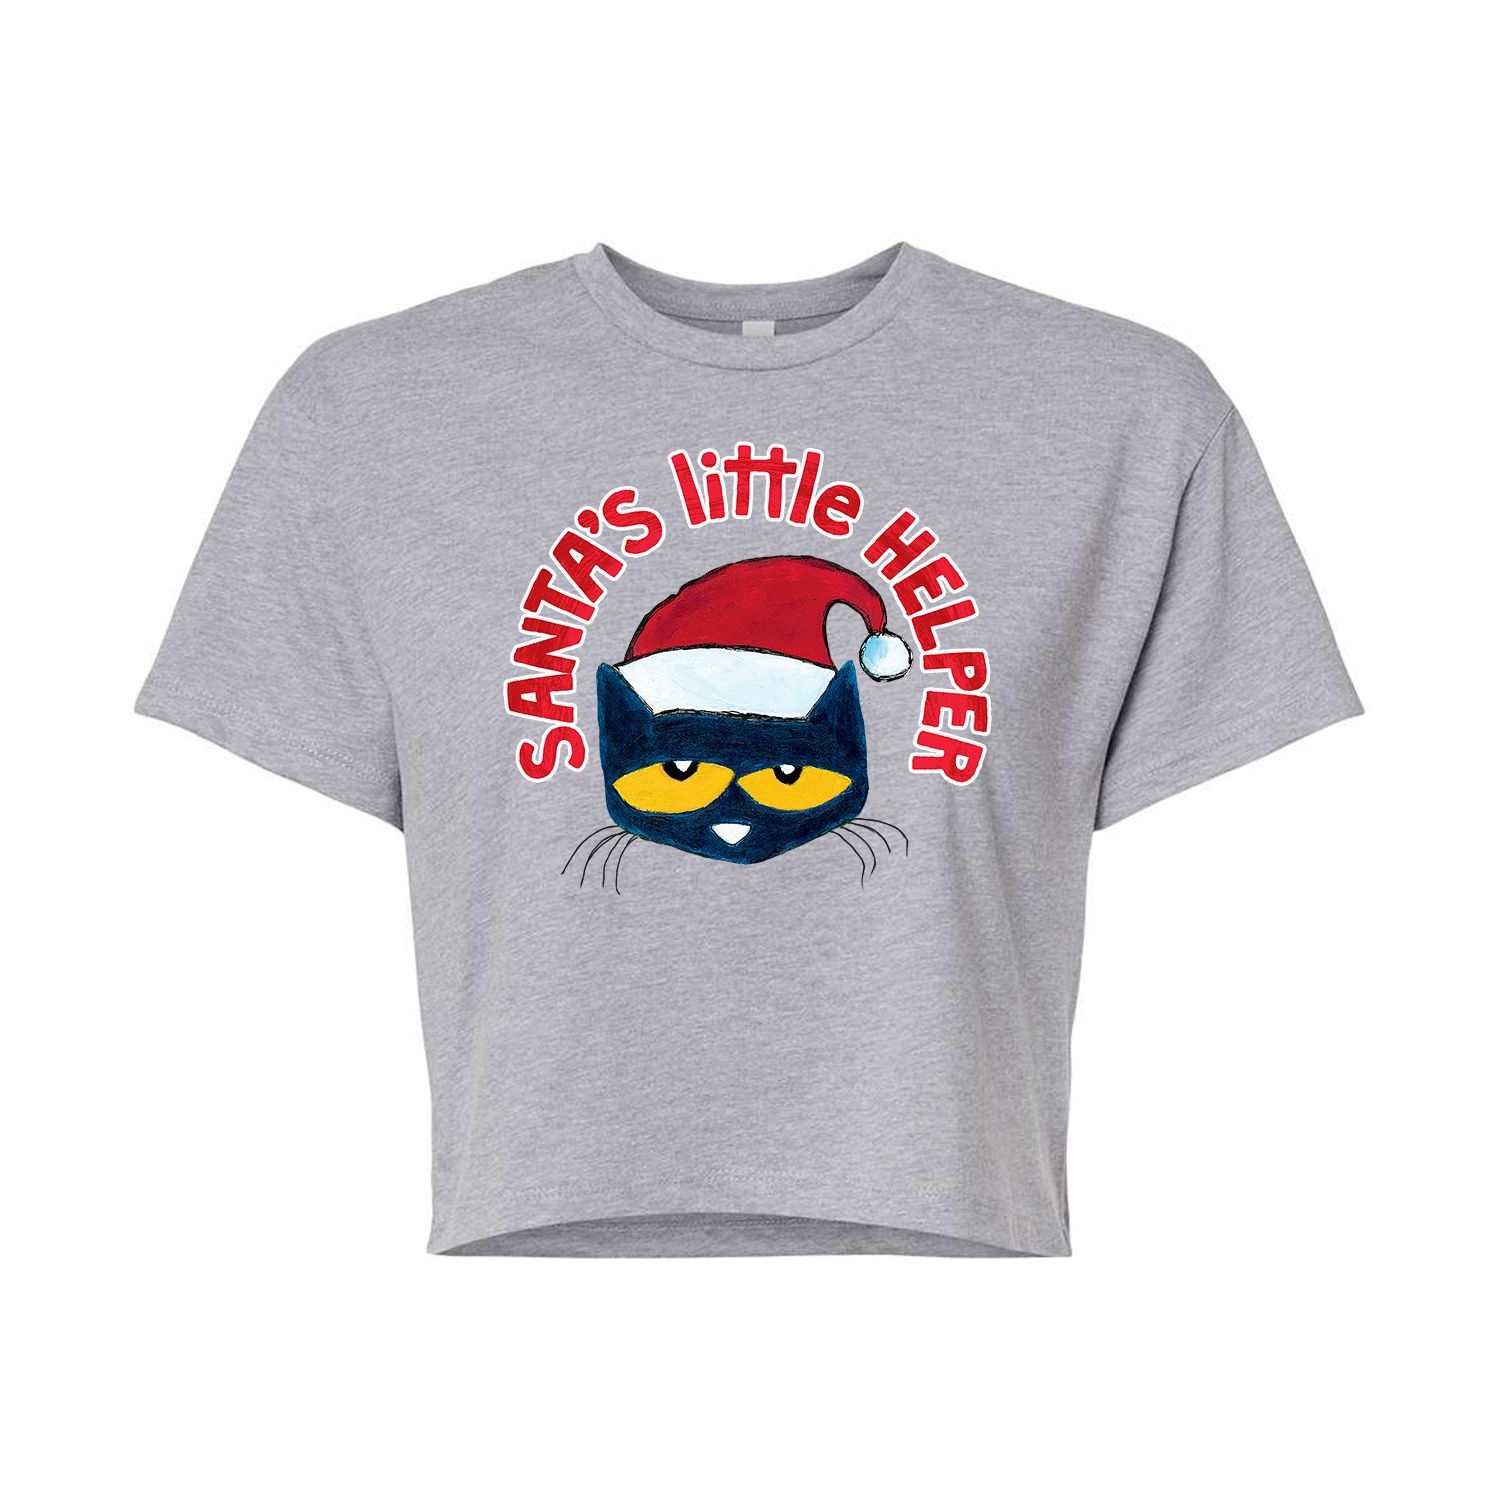 Укороченная футболка с рисунком Pete The Cat Santas Helper для юниоров Licensed Character укороченная футболка с рисунком pete the cat making friends для юниоров licensed character